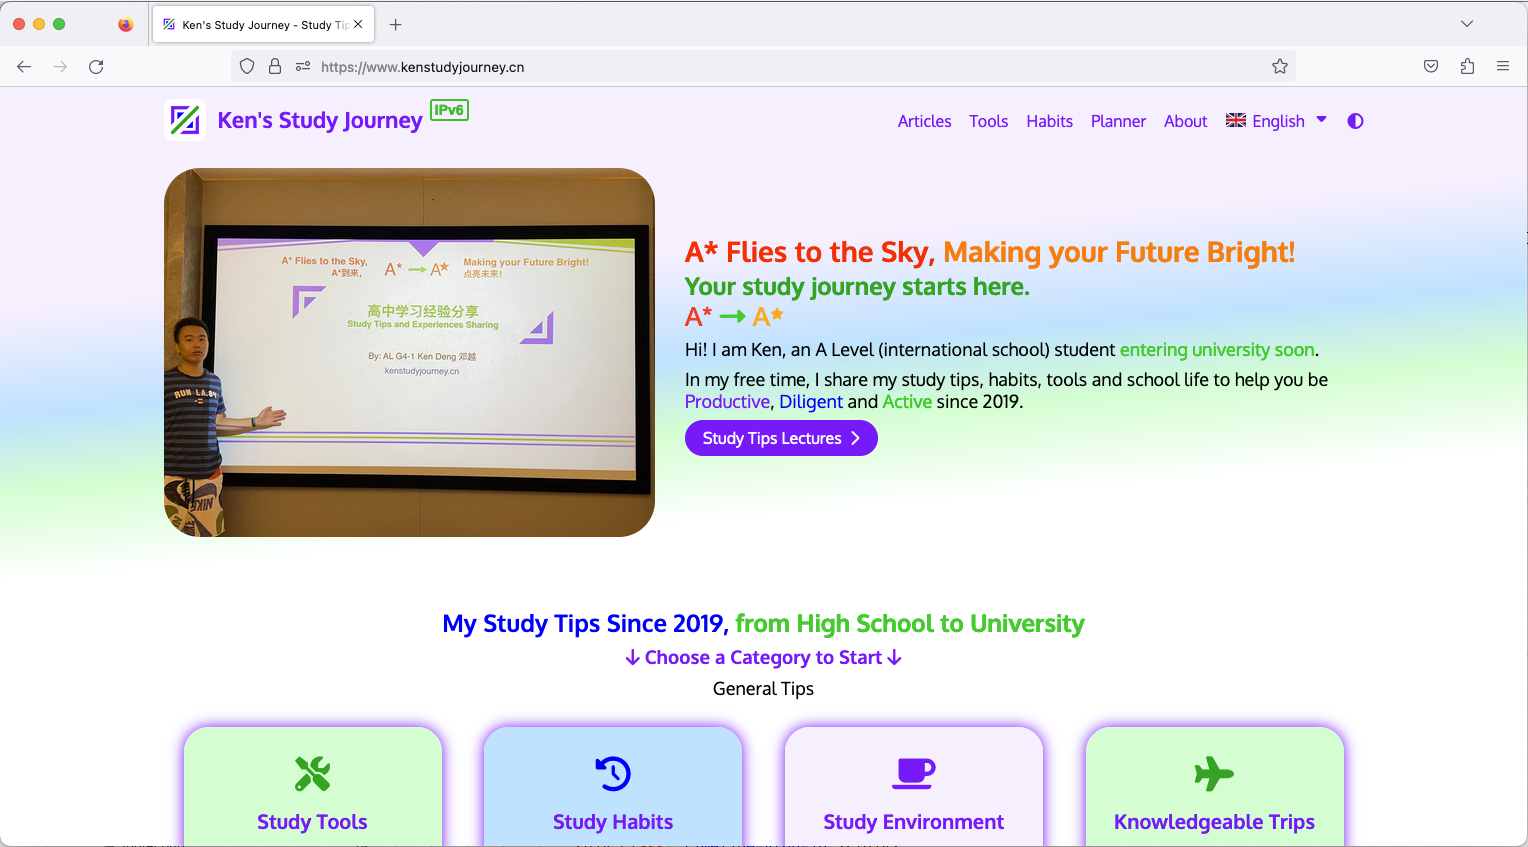 Ken's Study Journey Website Interface 8.0